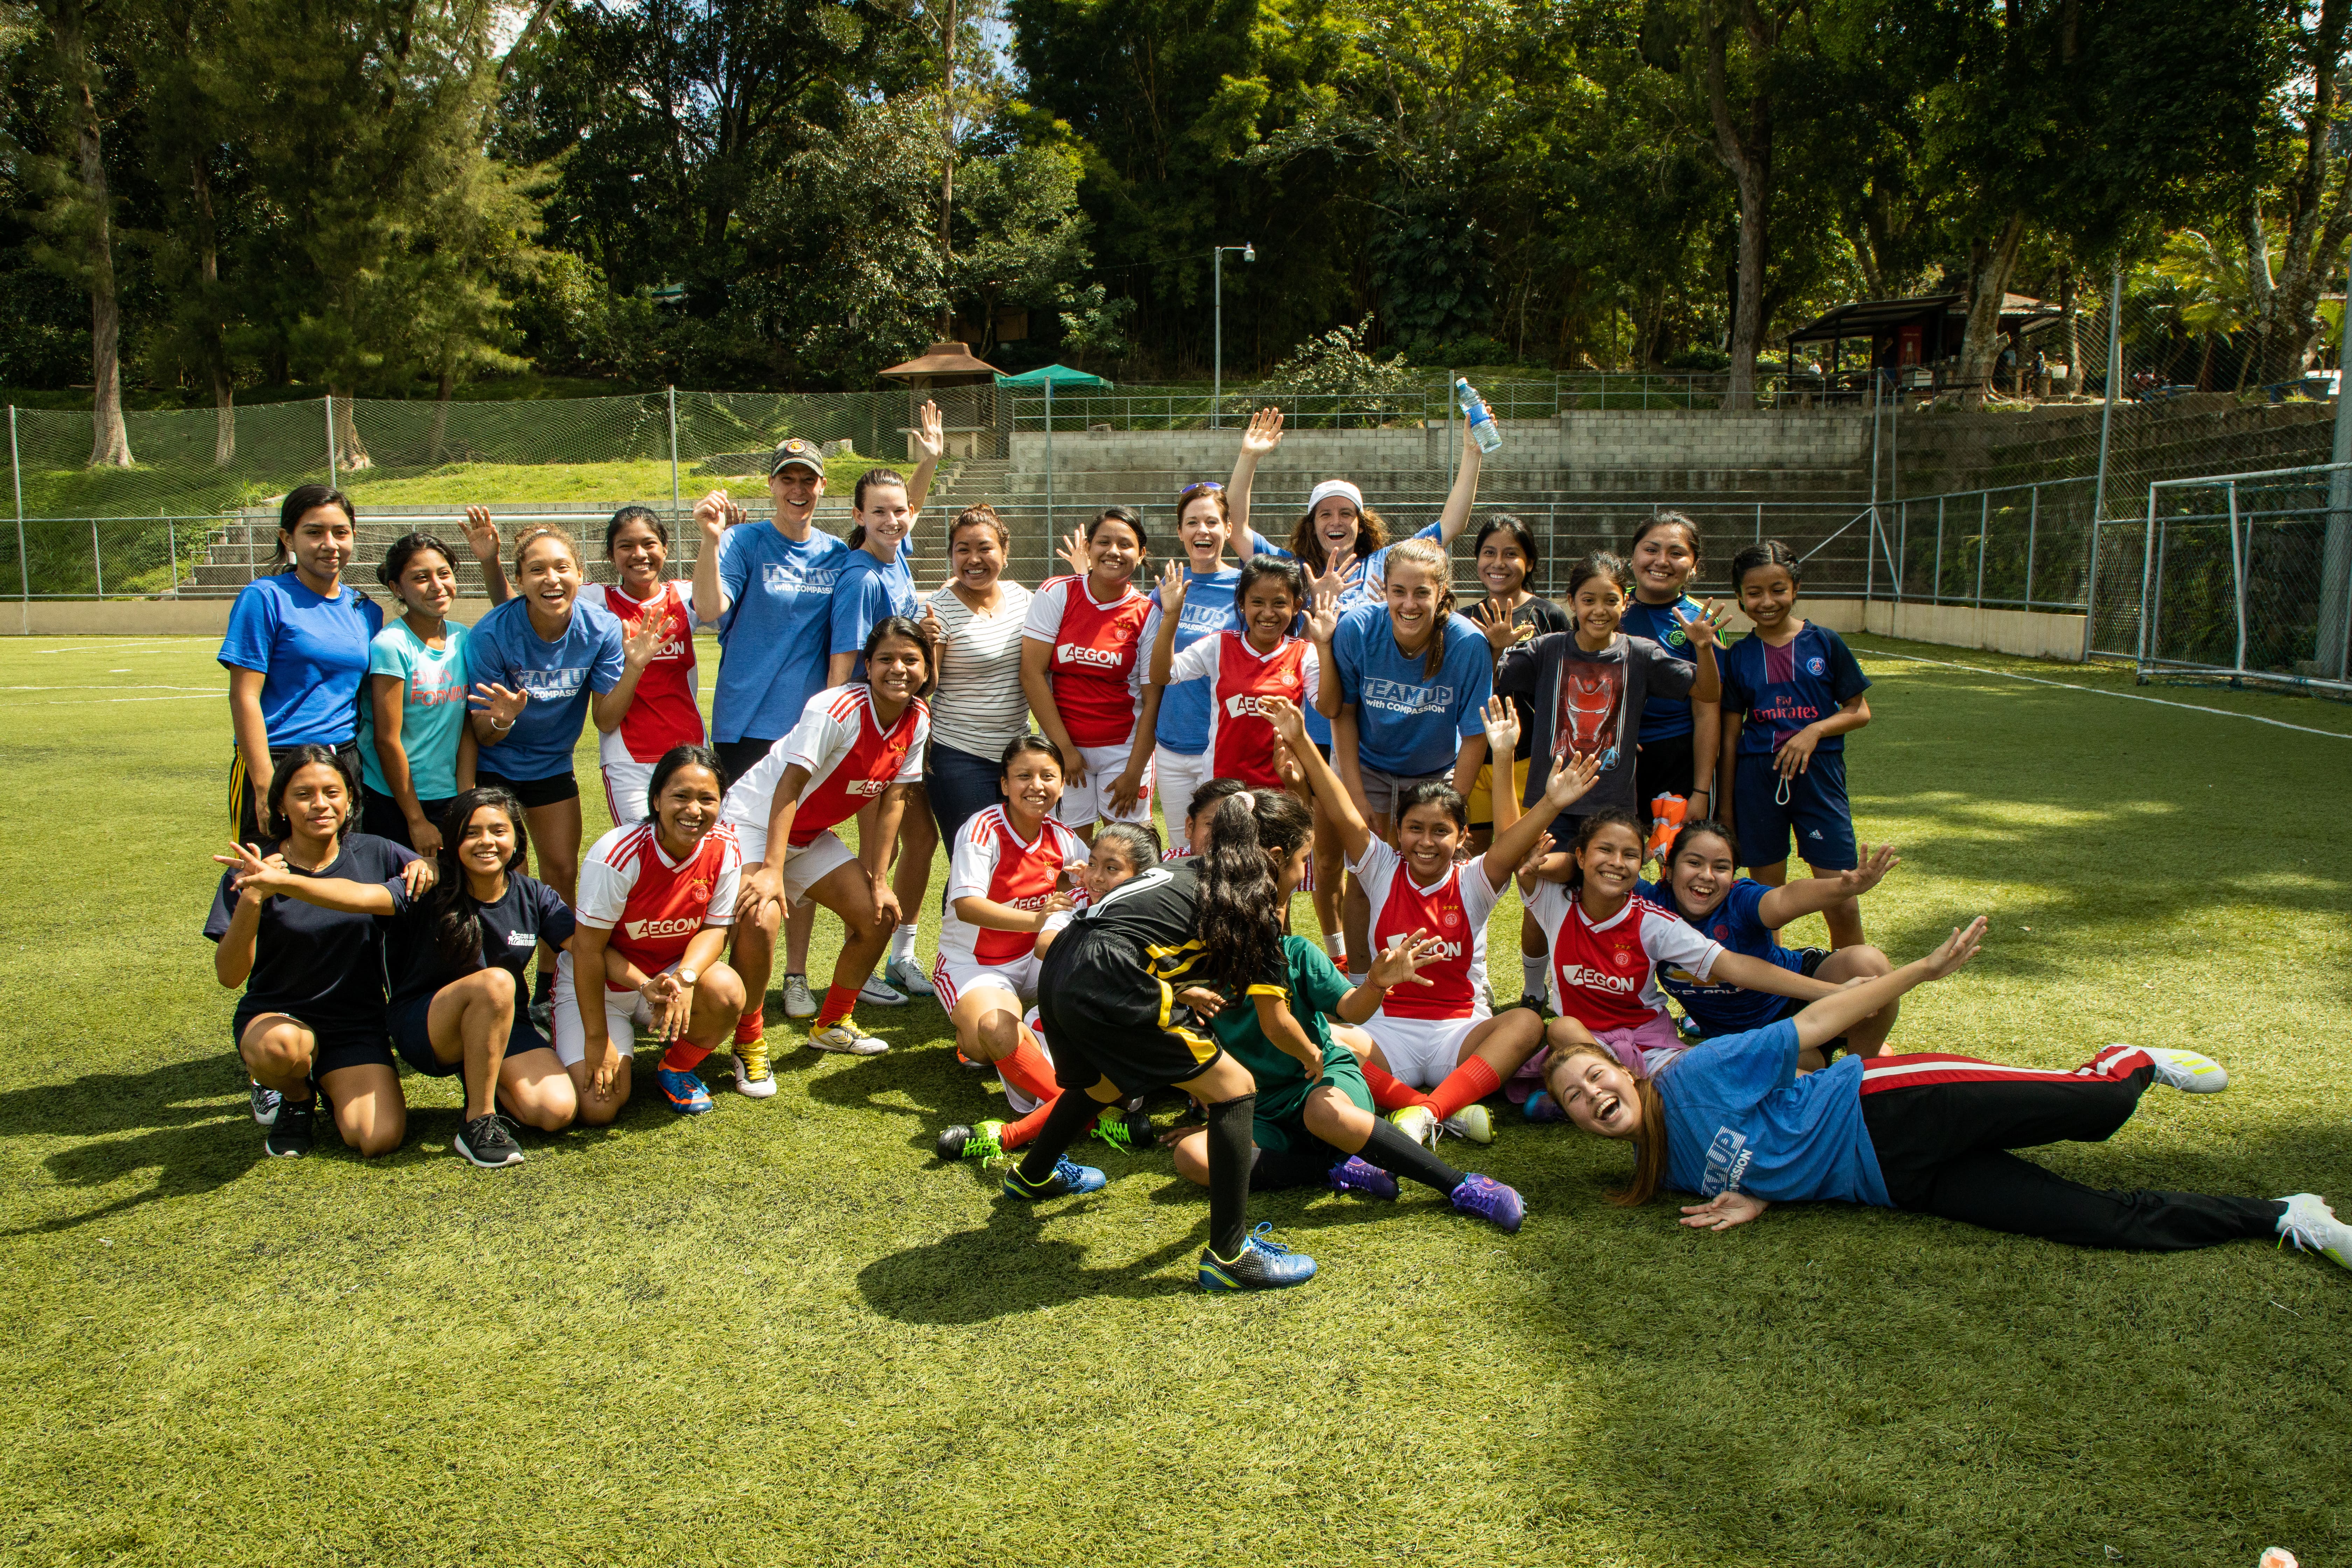 Soccer team of children in El Salvador pose for picture'